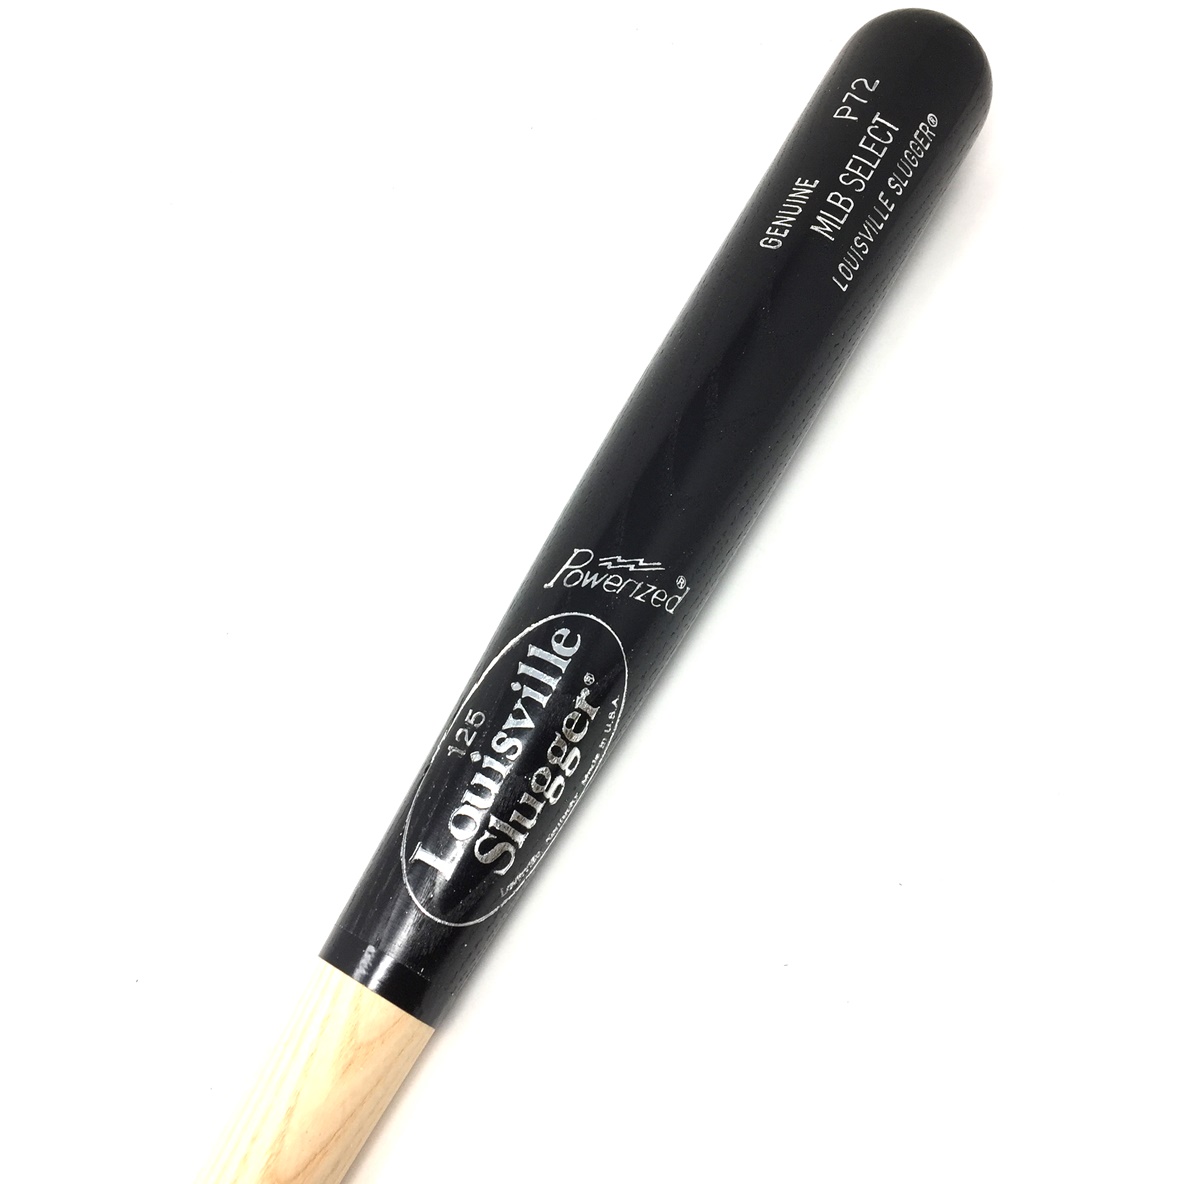 louisville-slugger-p72-mlb-select-ash-wood-baseball-bat-33-inch WBBP14P72NGW-33 Louisville Does Not Apply Louisville Slugger MLB Select Ash Wood Baseball Bat. P72 Turning Model. The